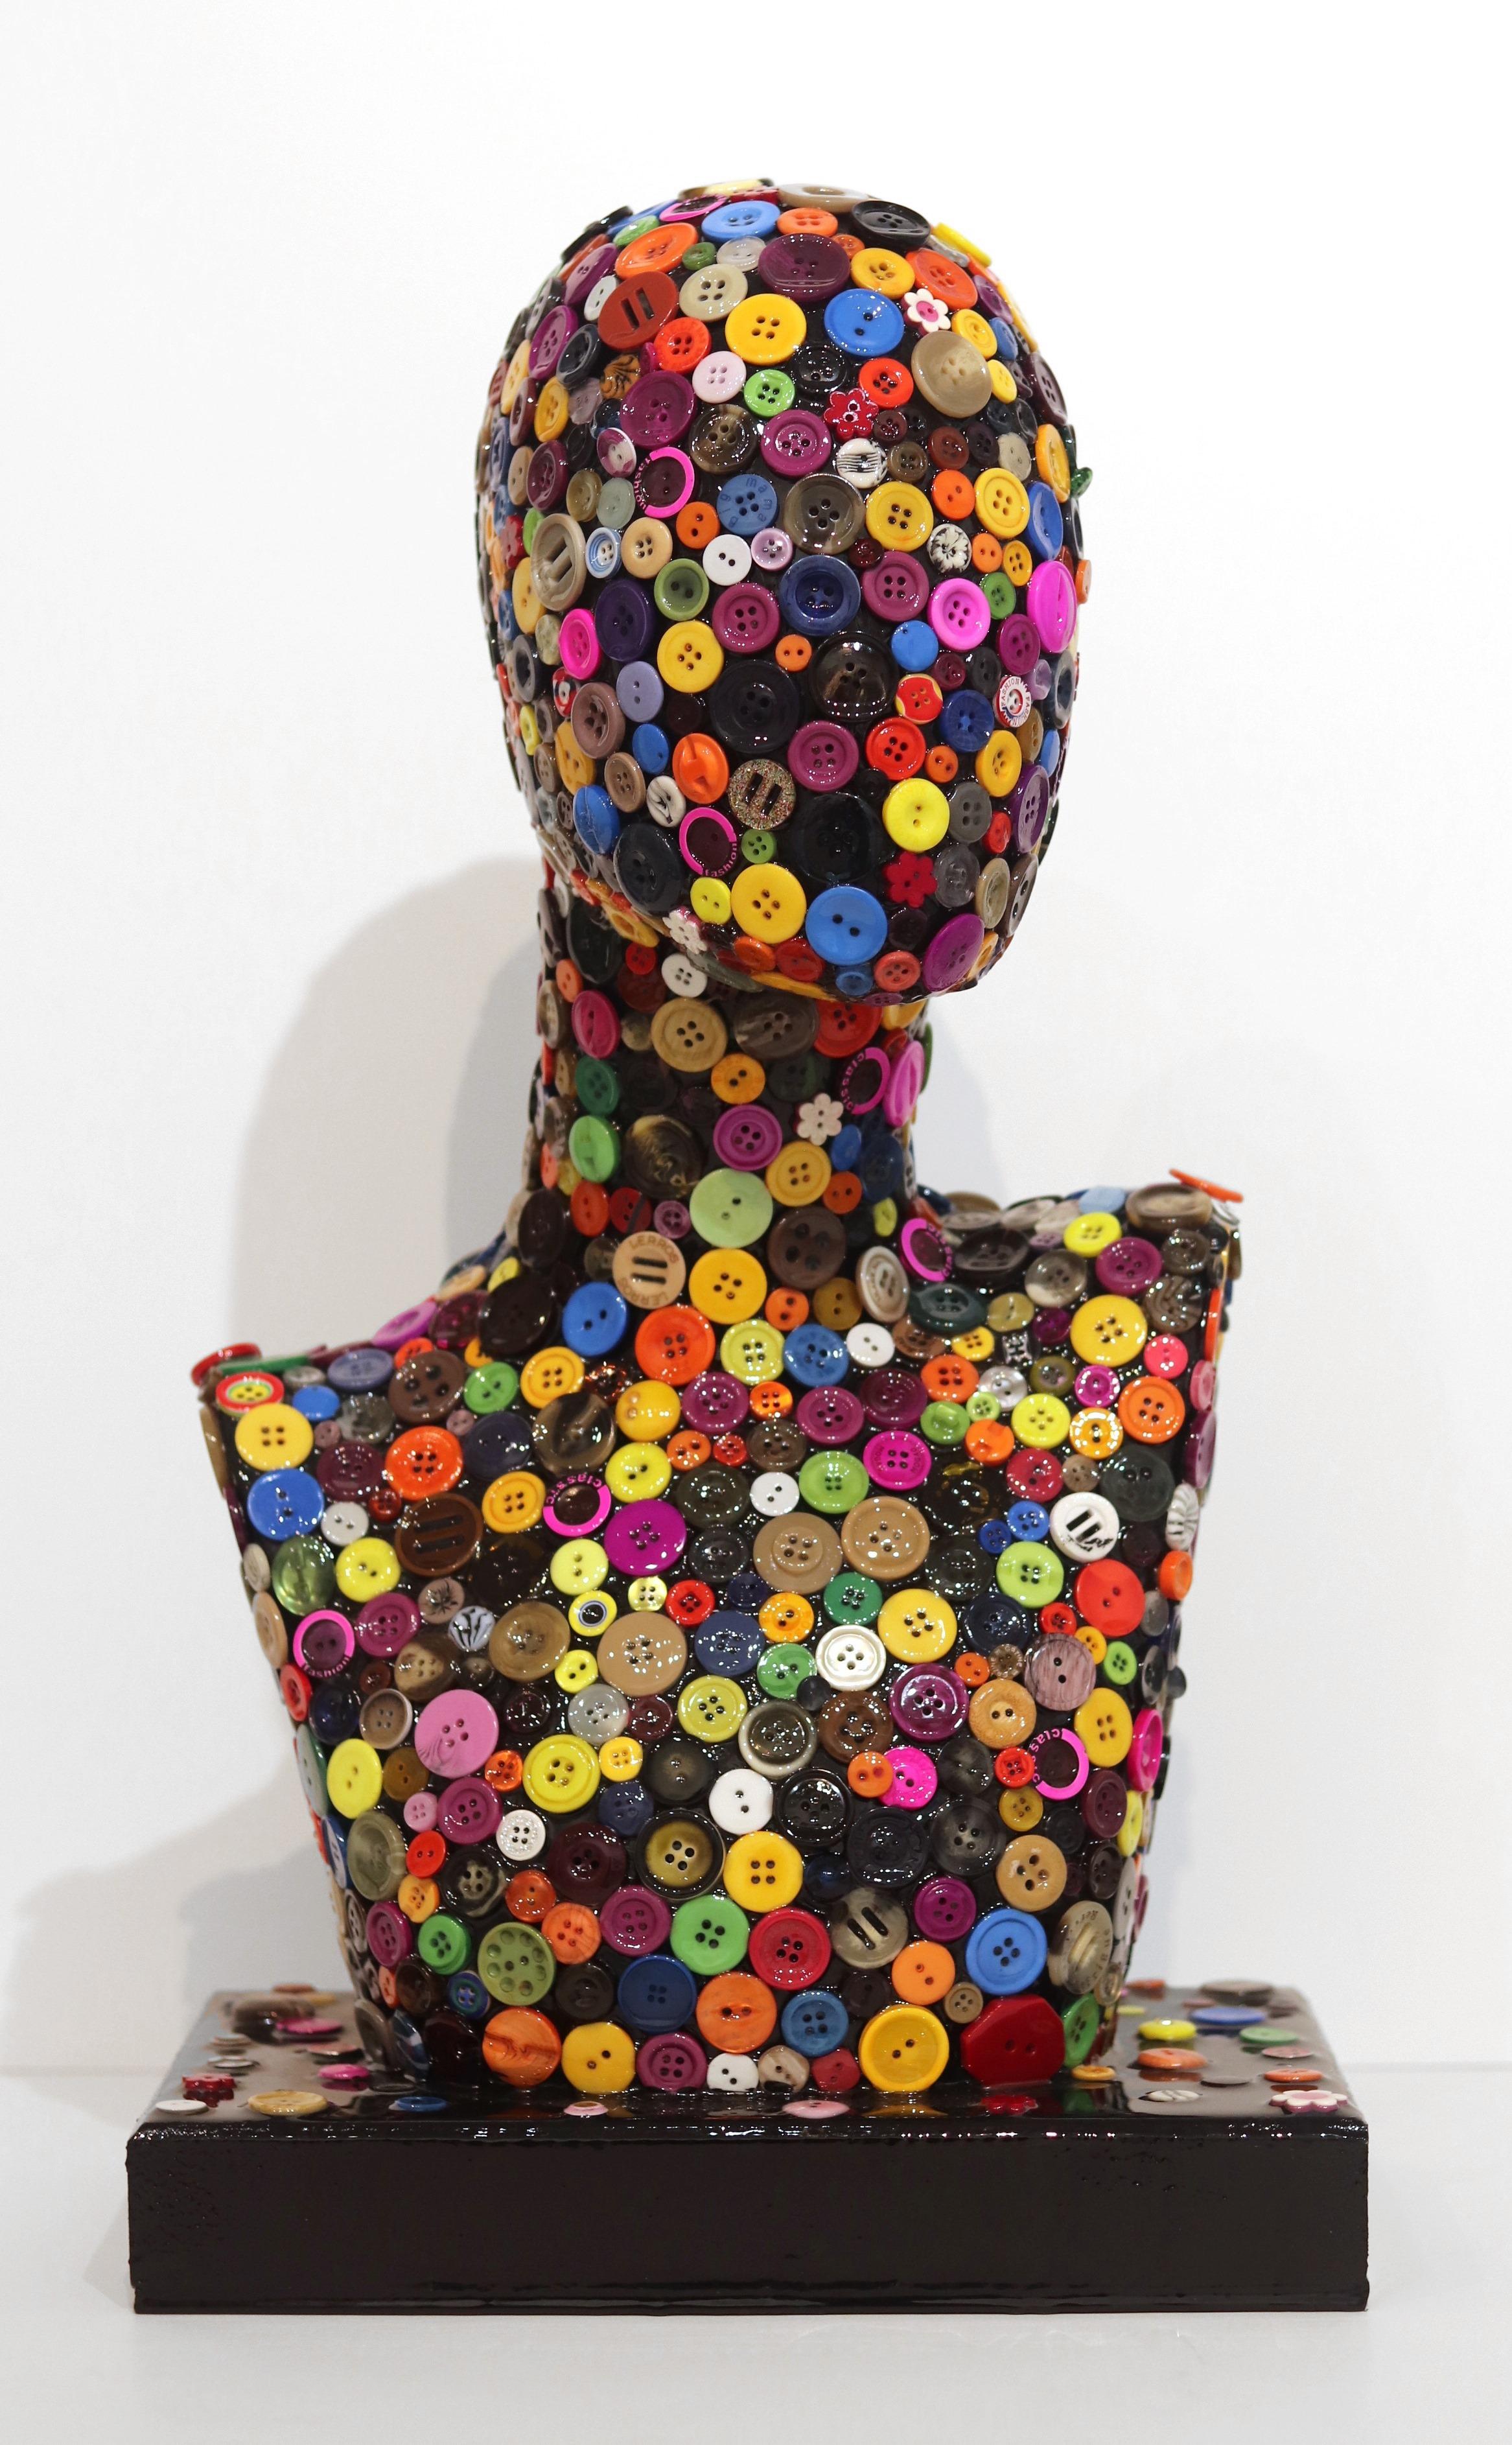 Mauro Oliveira Figurative Sculpture - Fashionista II - Colorful Mixed Media Sculptural Artwork